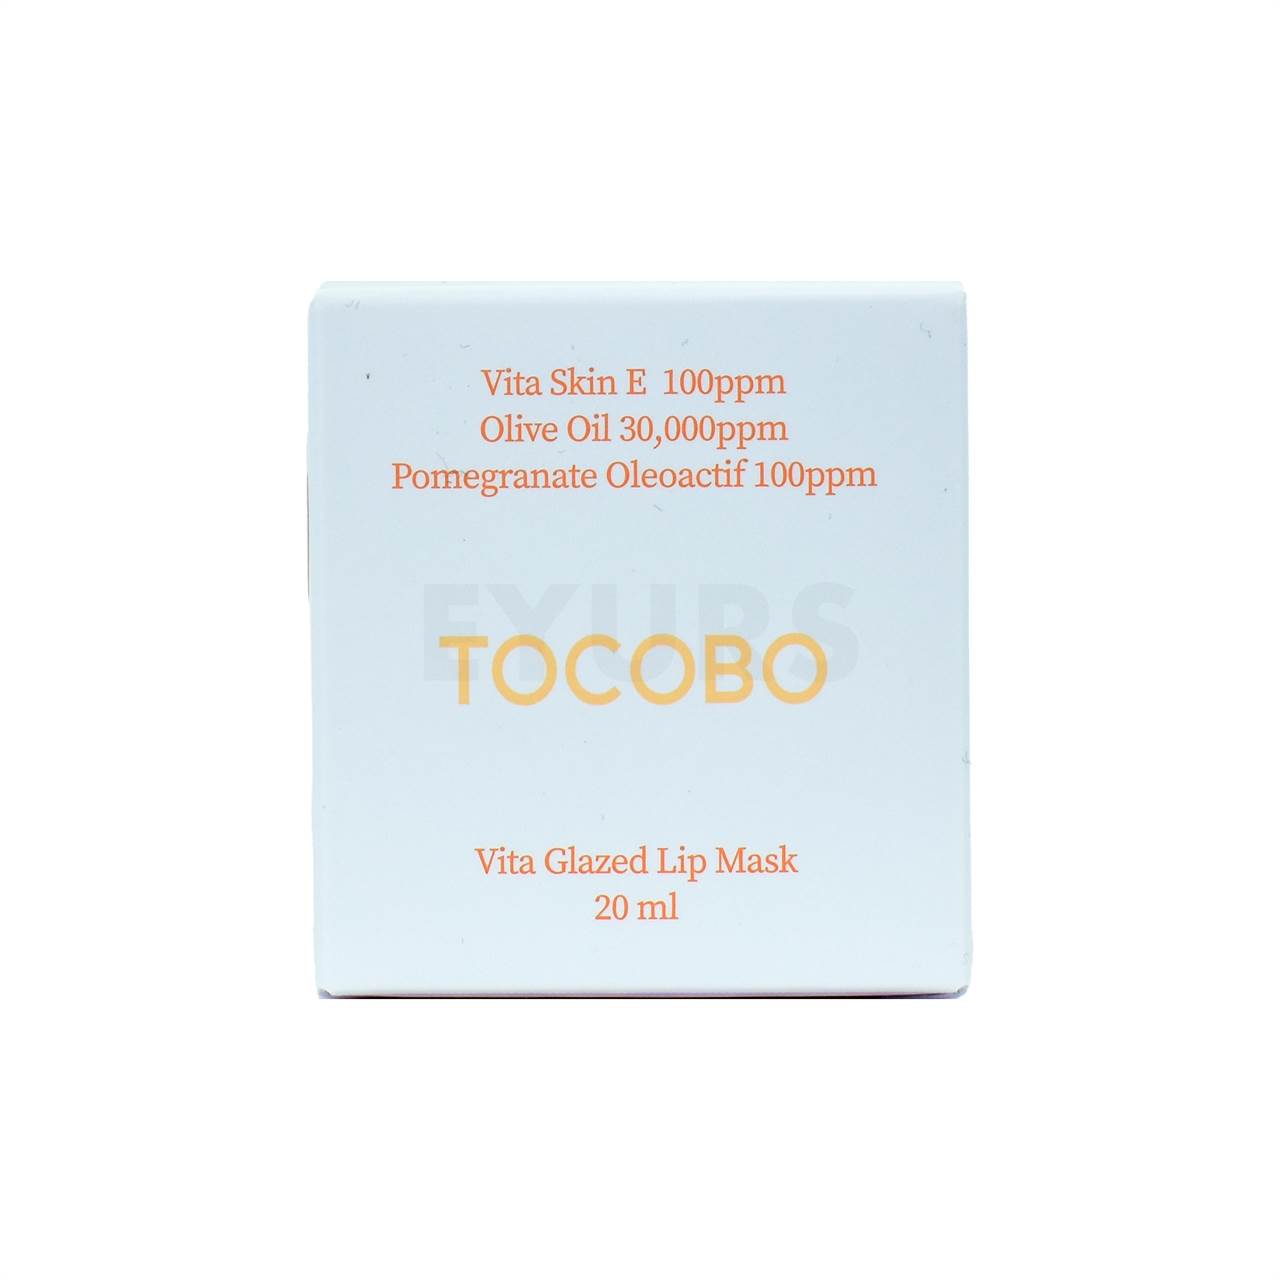 tocobo vita glazed lip mask 20ml front side packaging